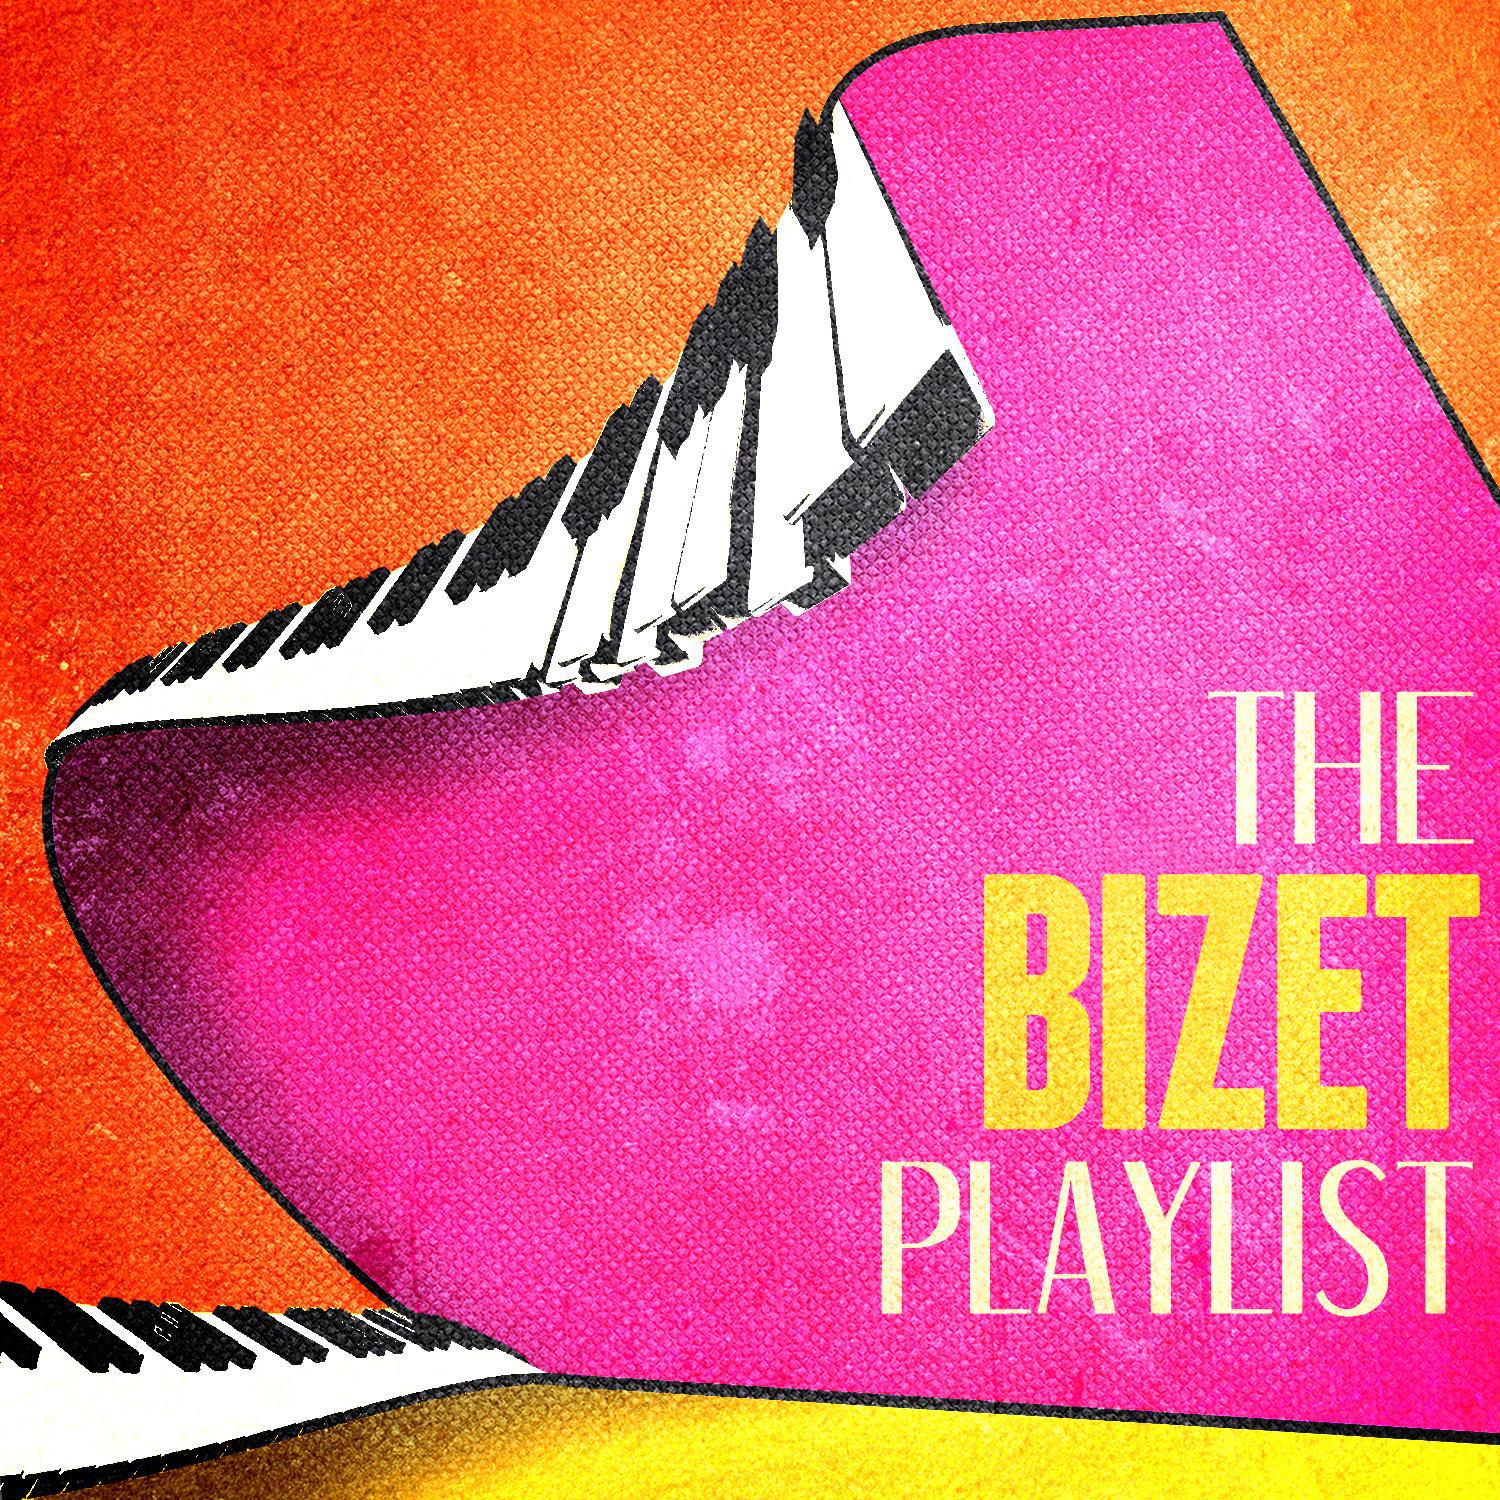 The Bizet Playlist